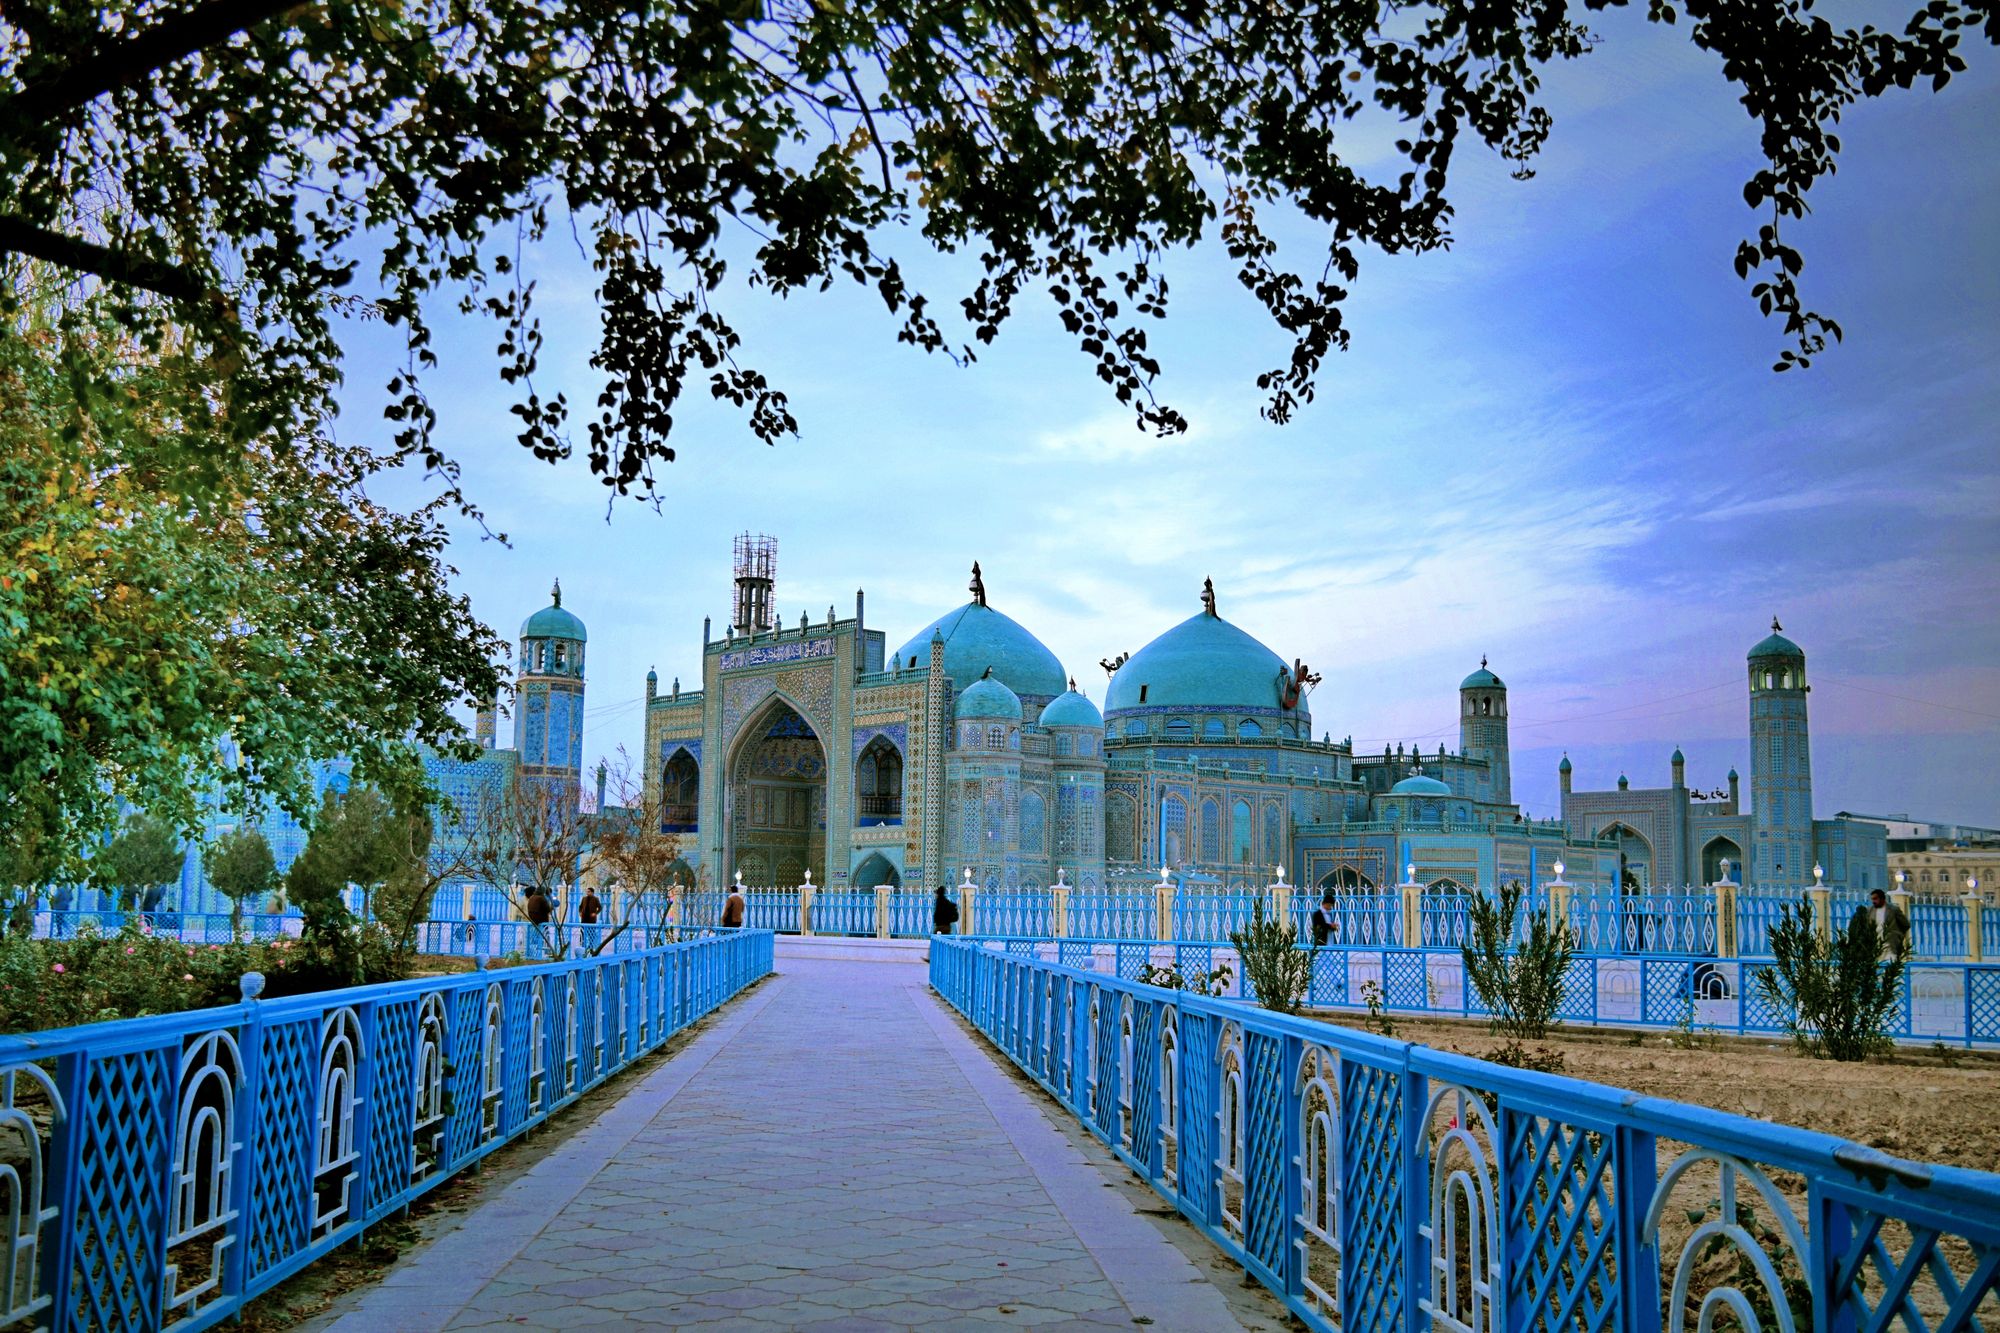 Blue Mosque of Mazar-i-Sharif